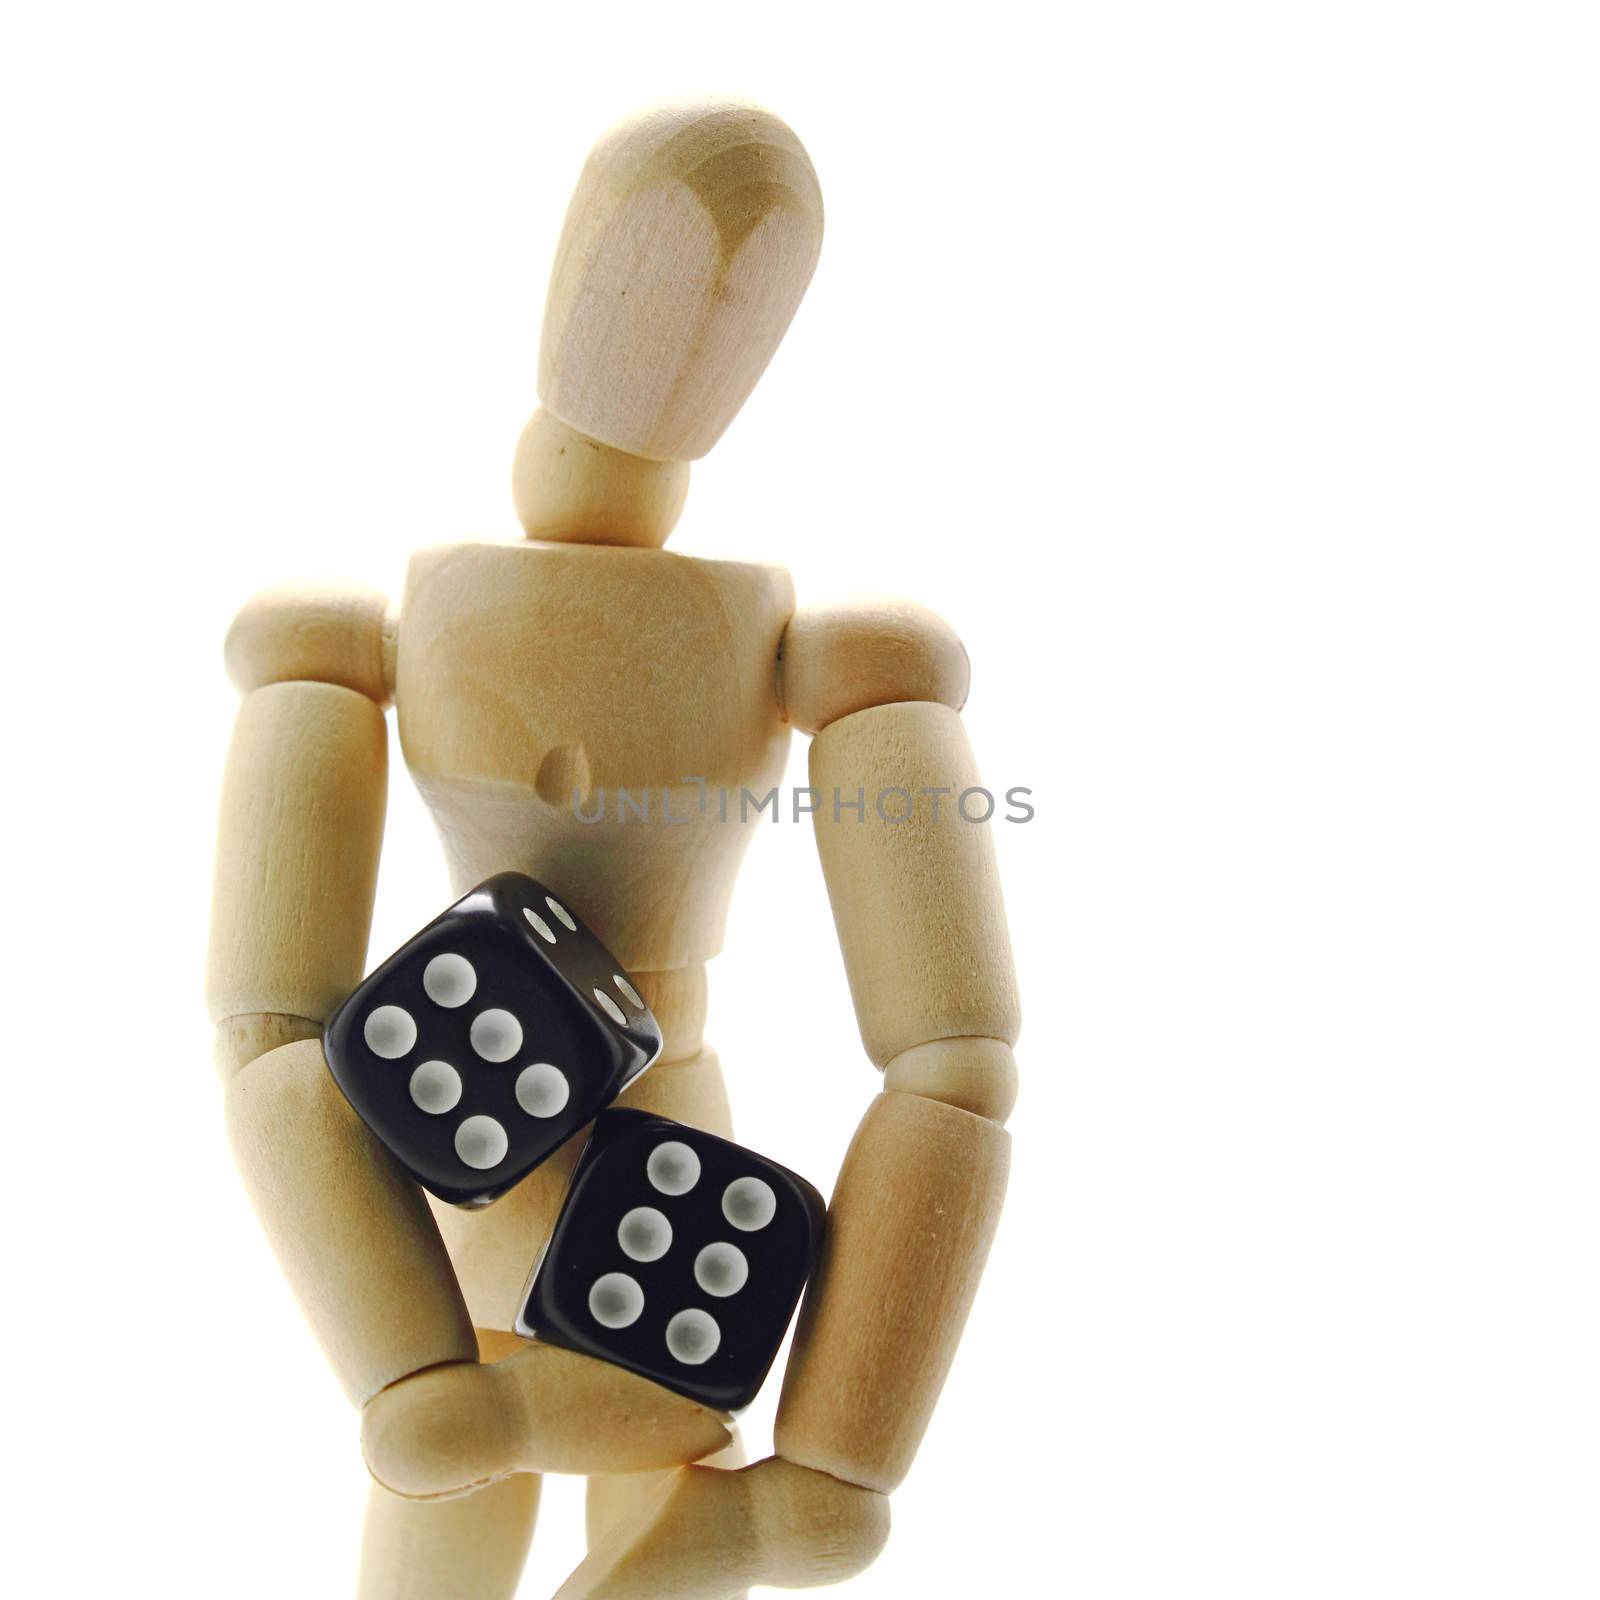 Wooden manikin holding dice on white background